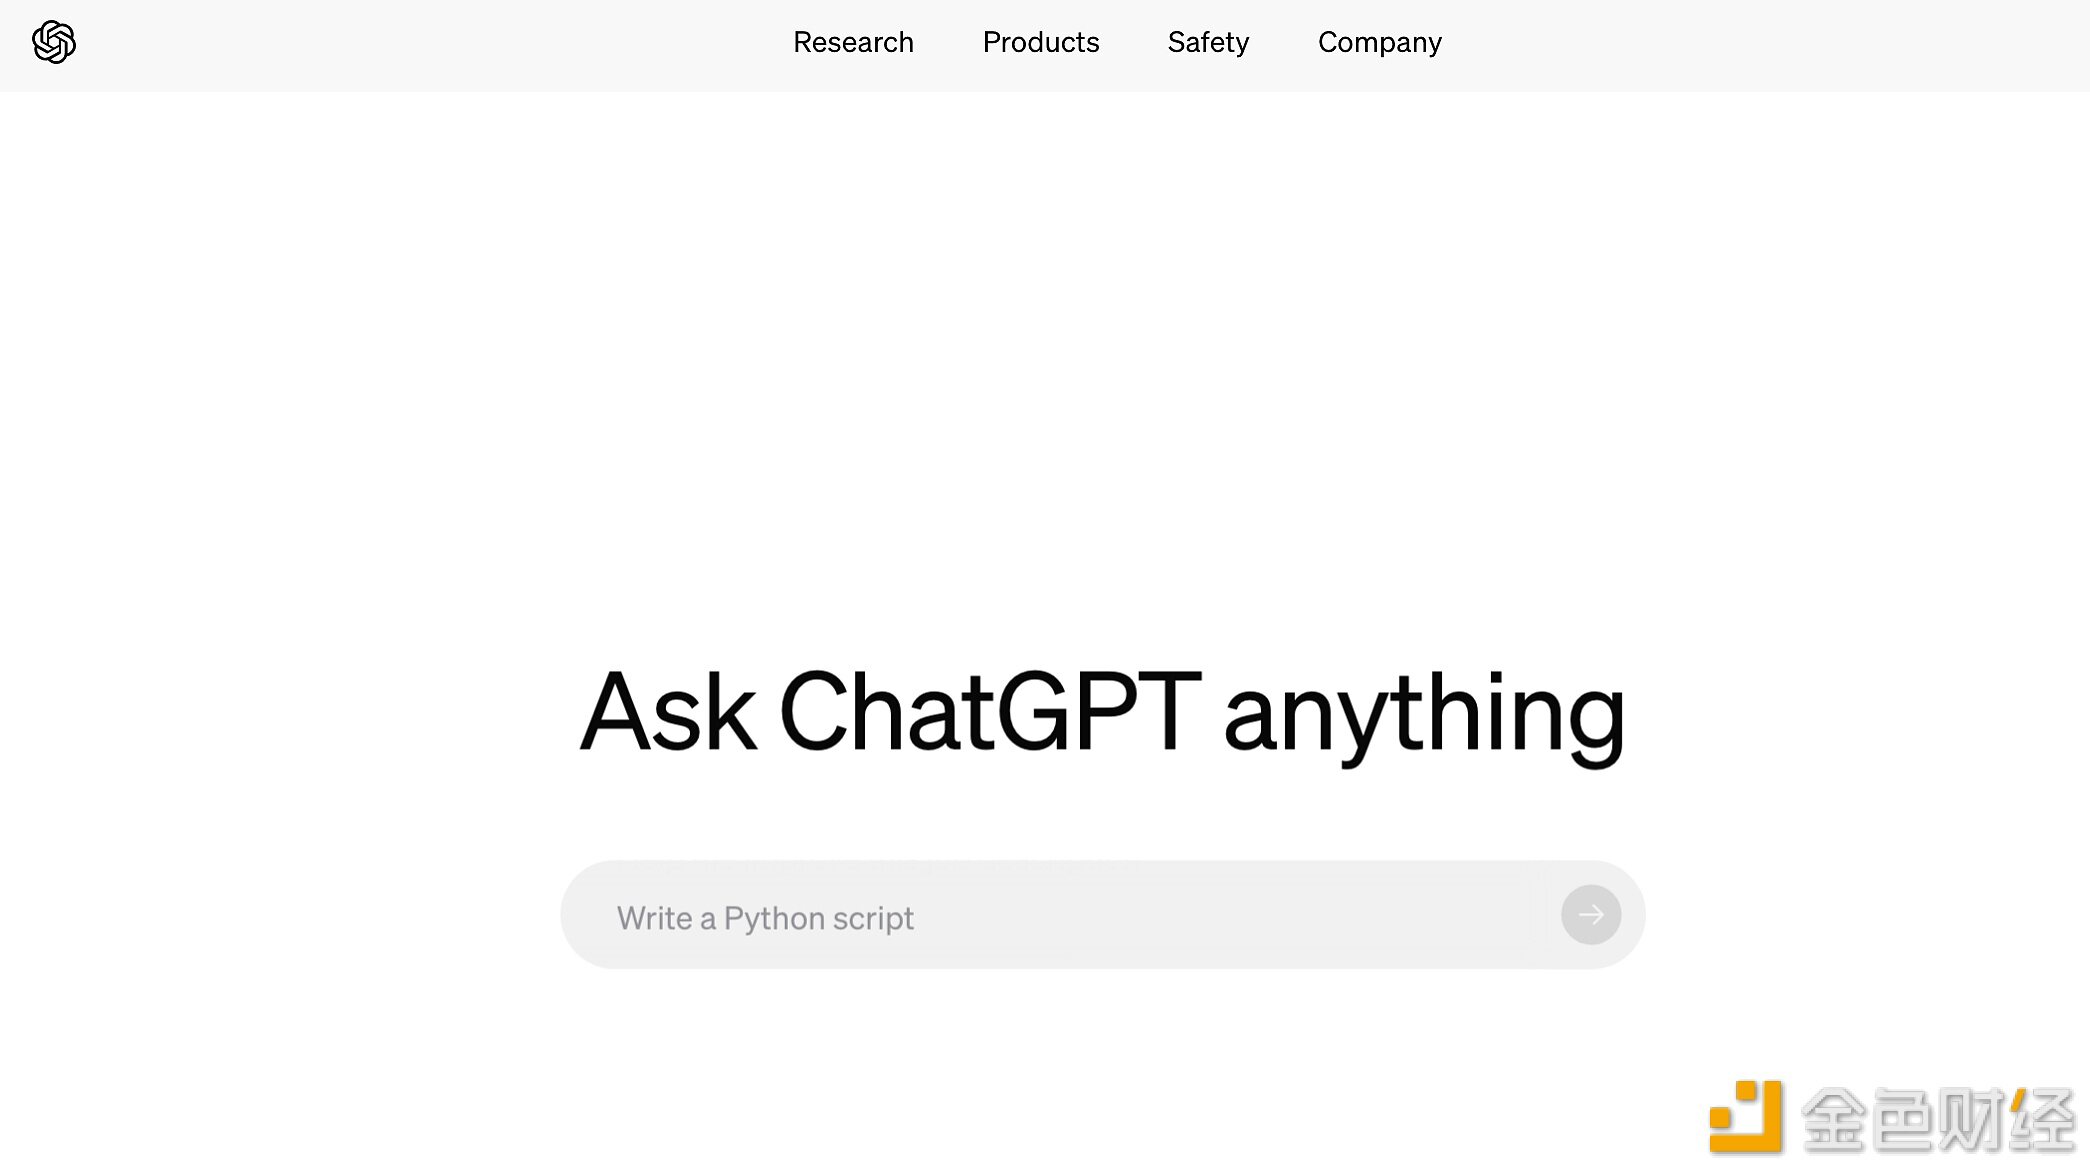 OpenAI官网主页已显示“AskChatGPTanything”轮播界面